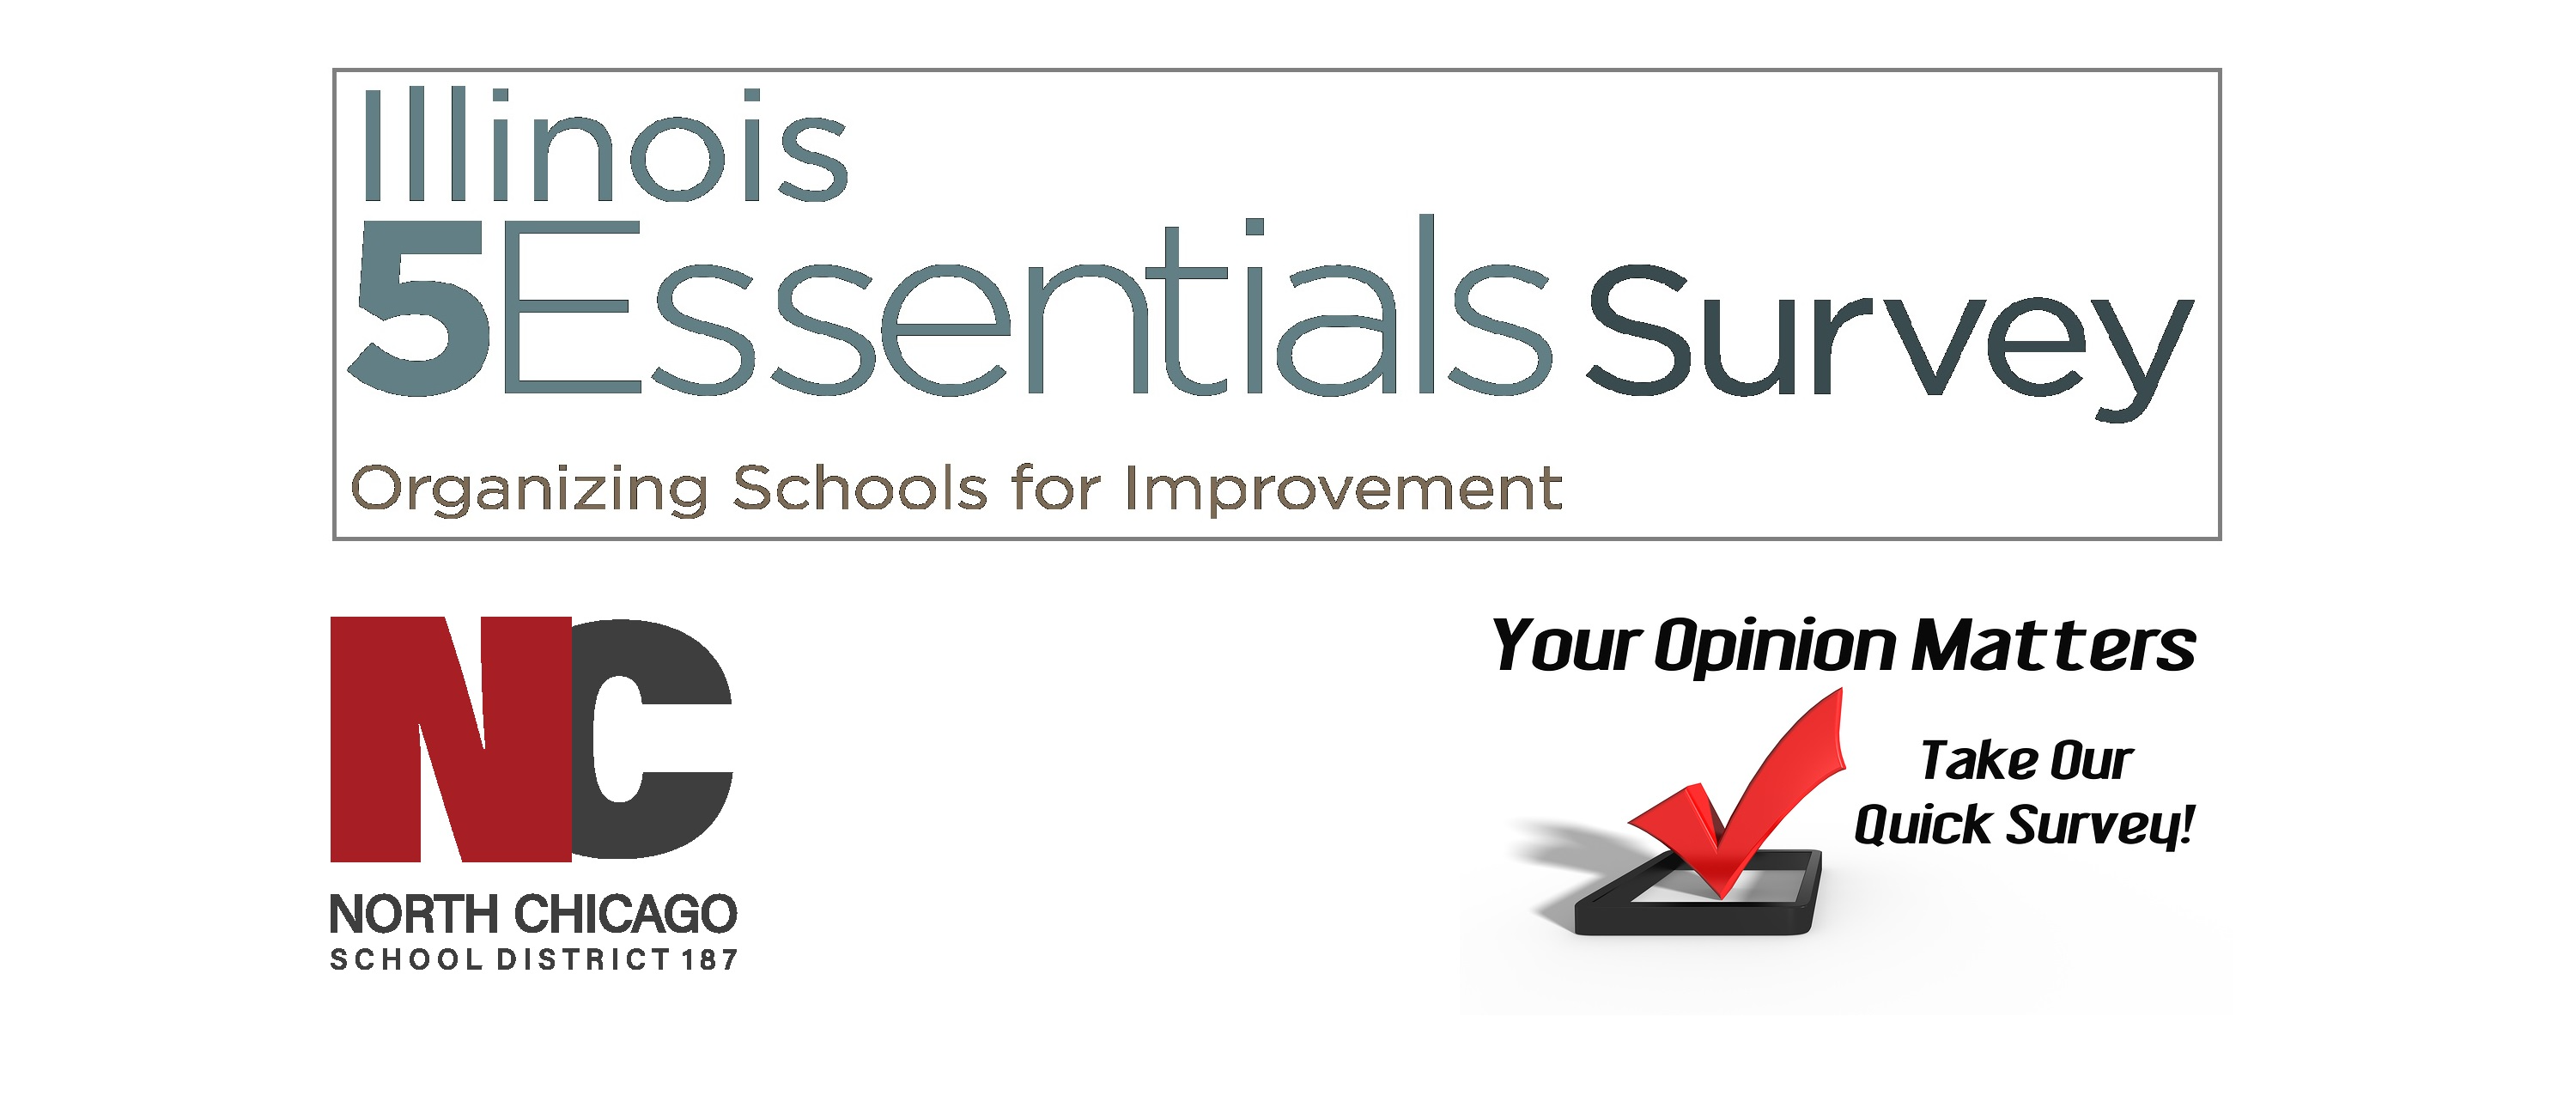 5 essentials survey